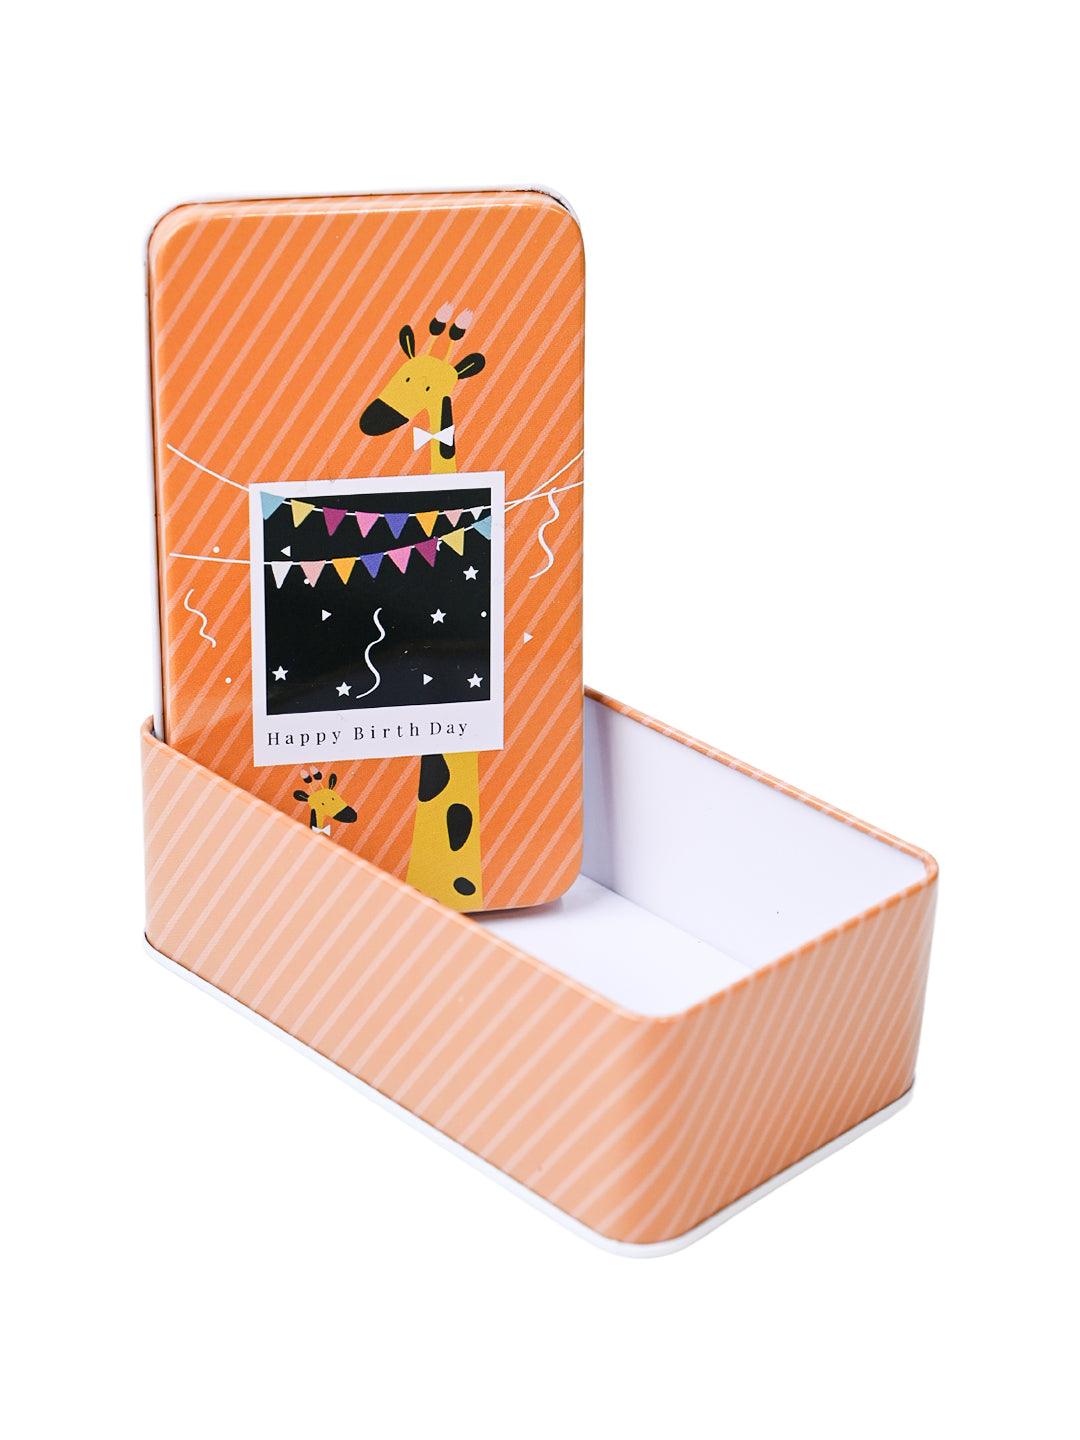 Animal Print Tin Storage Box - Set Of 3, Orange & Yellow - MARKET99